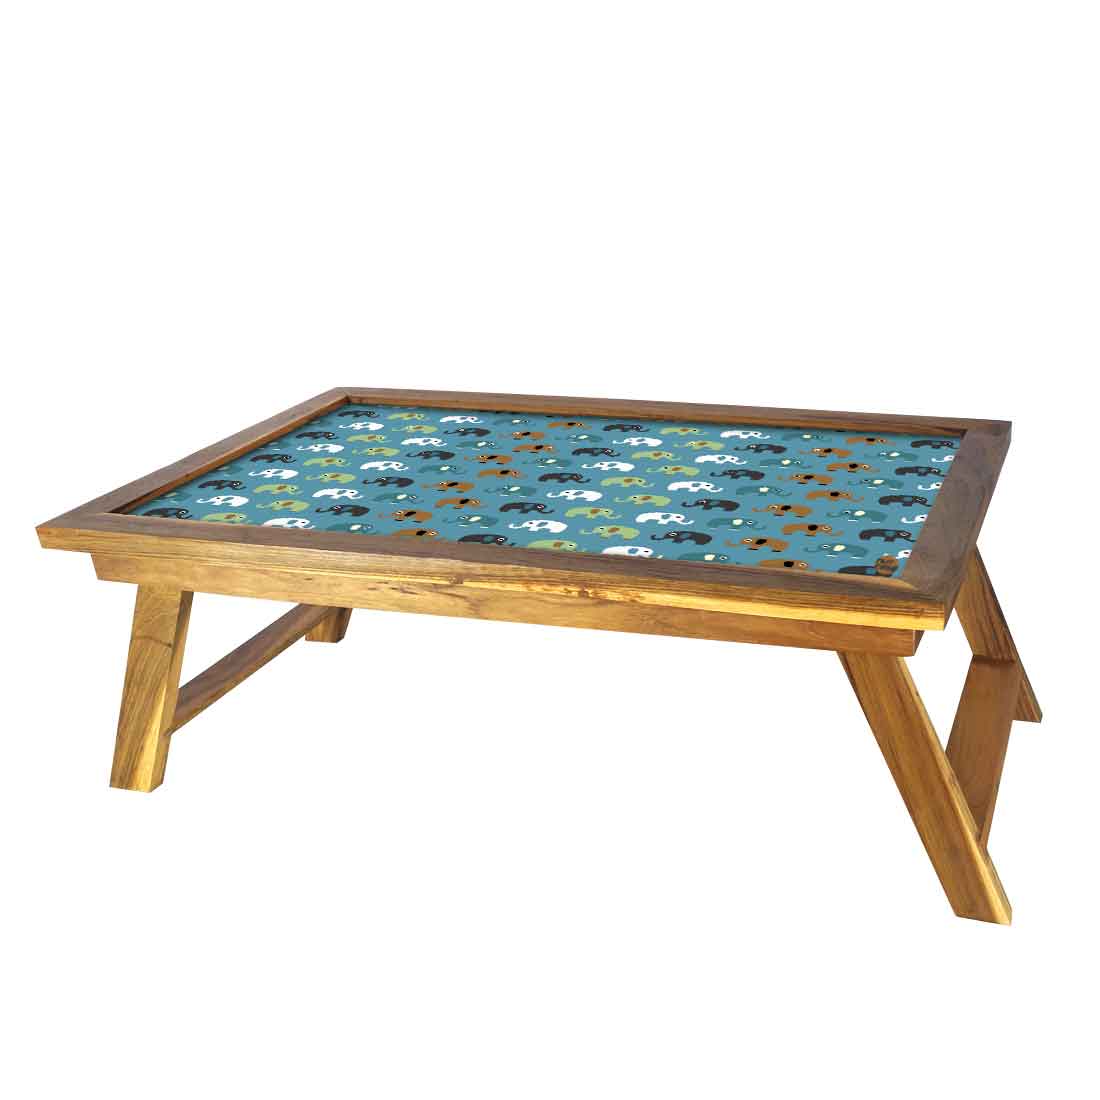 Nutcase Designer Breakfast and Bed Tray Foldable Teak Wooden Study Desk - Mini Elephant Blue Nutcase